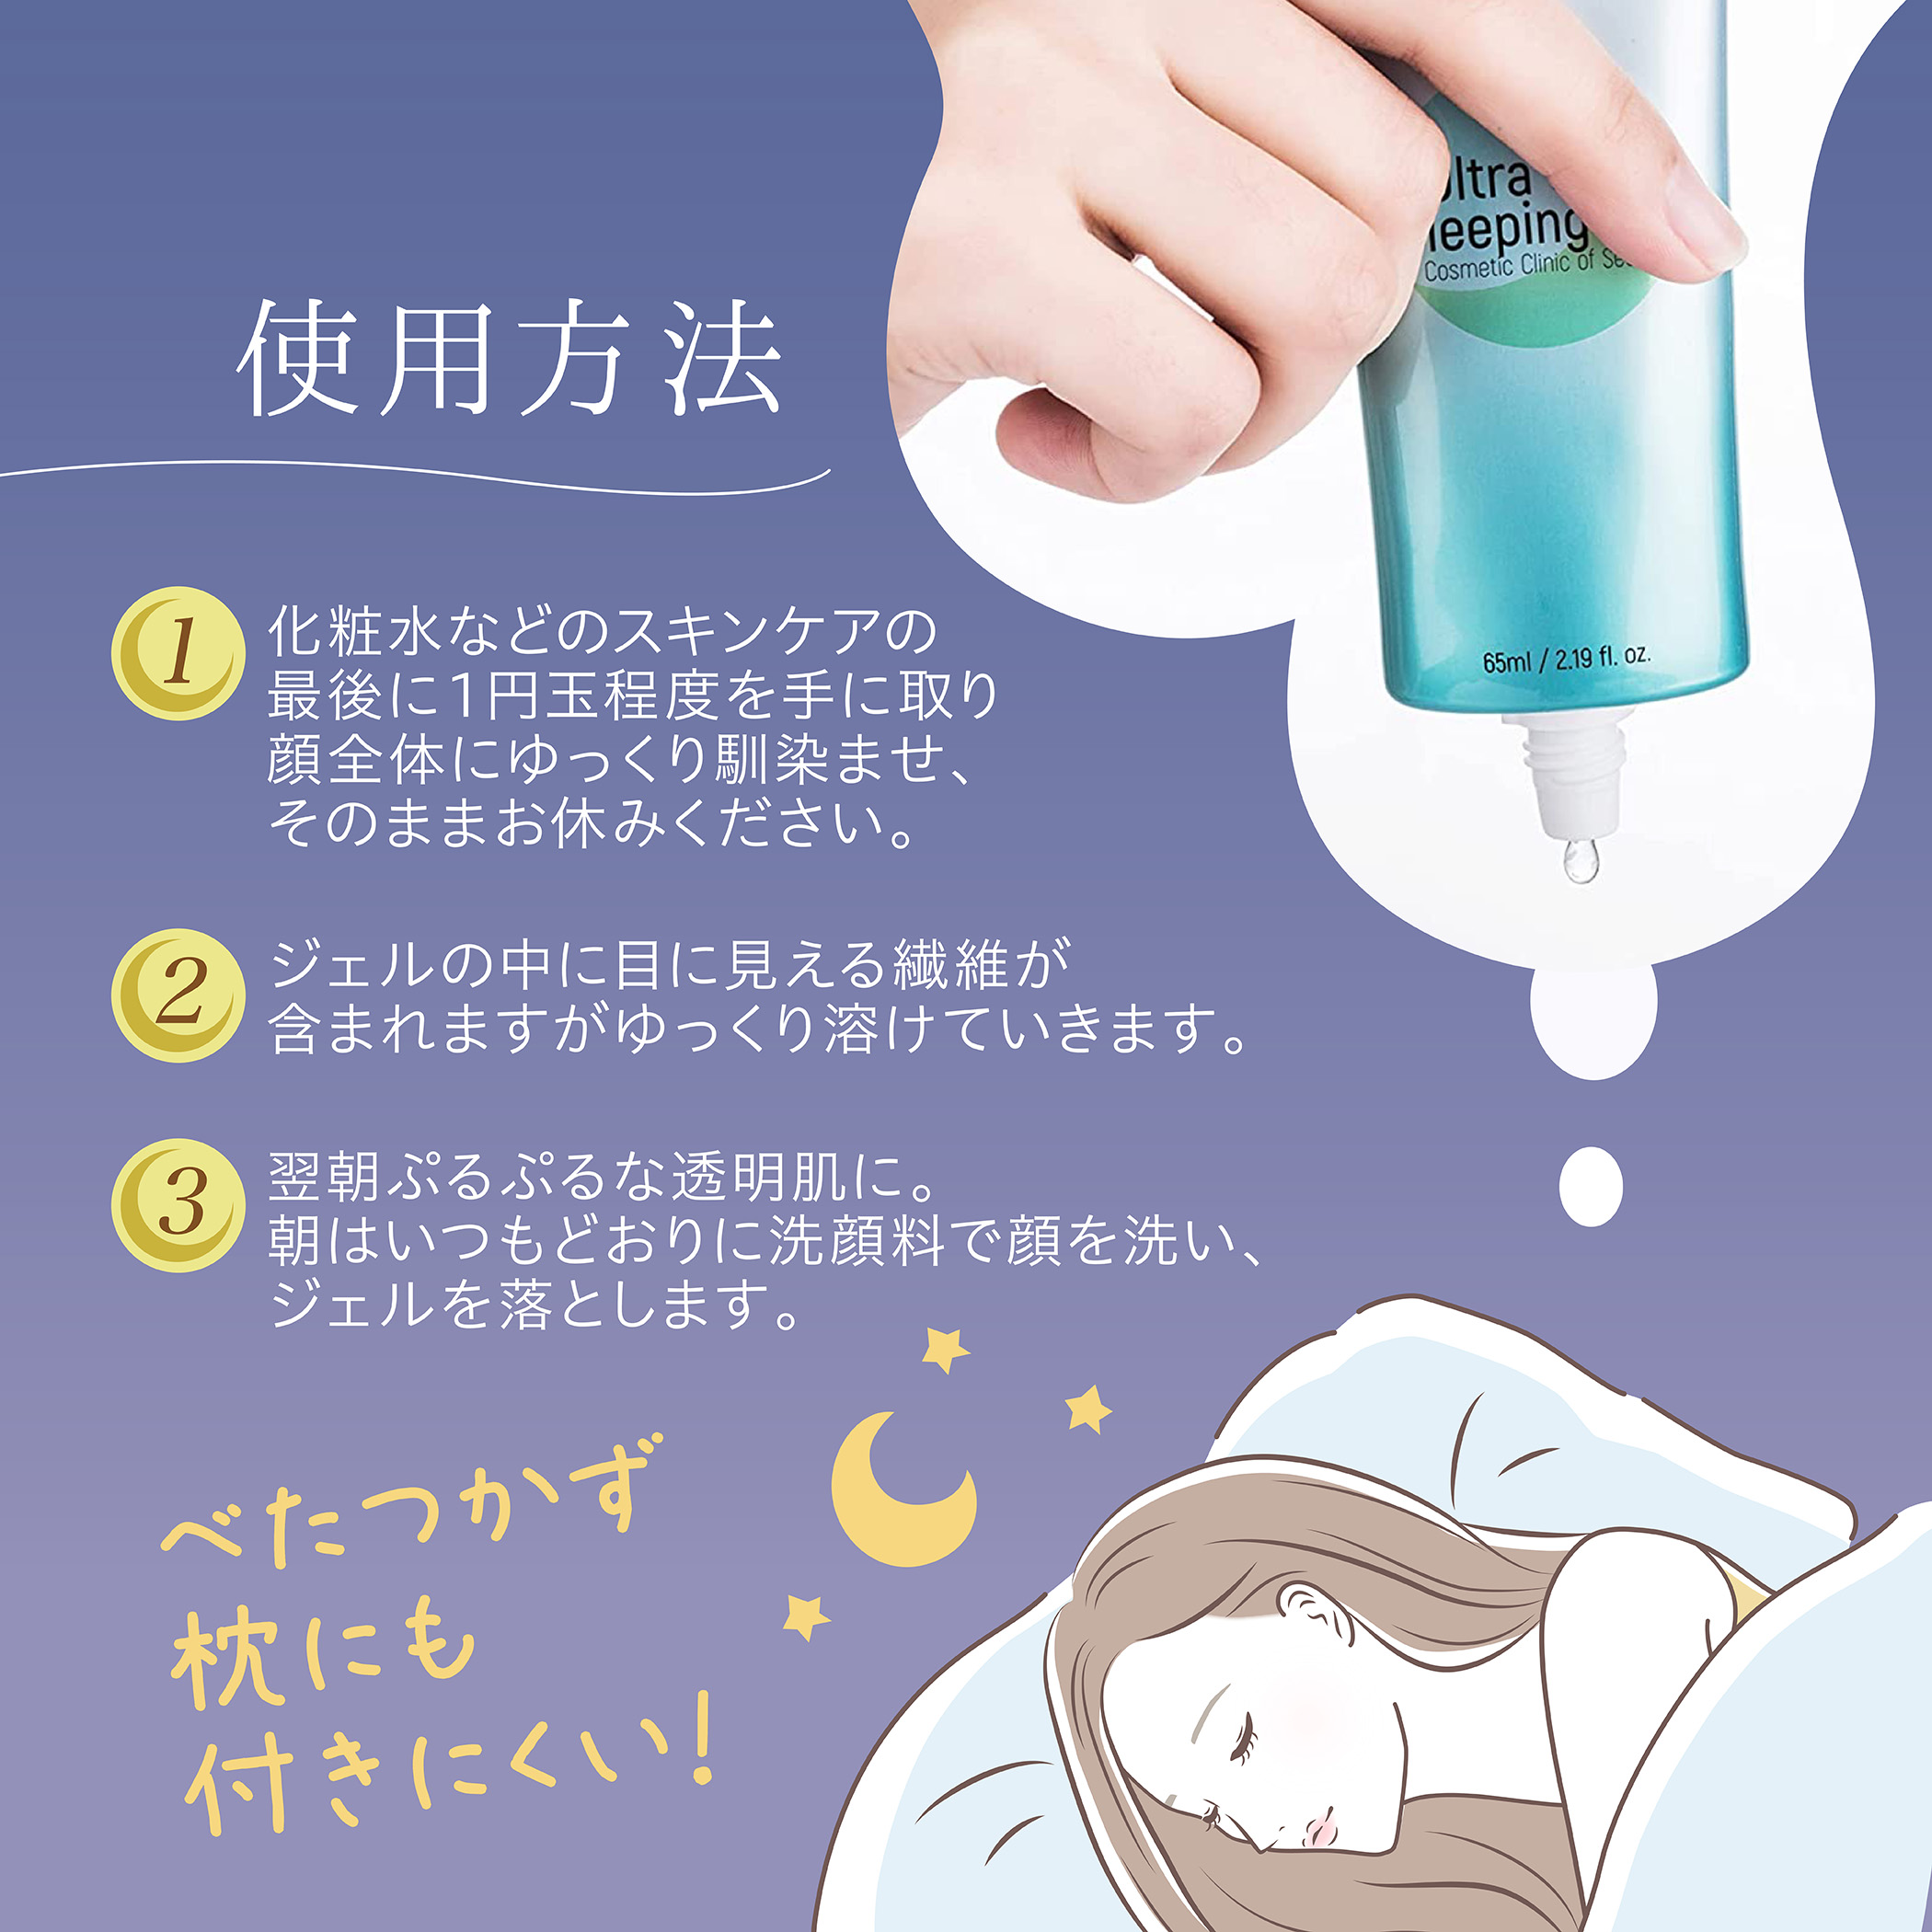 explanation of how using ultra sleeping gel